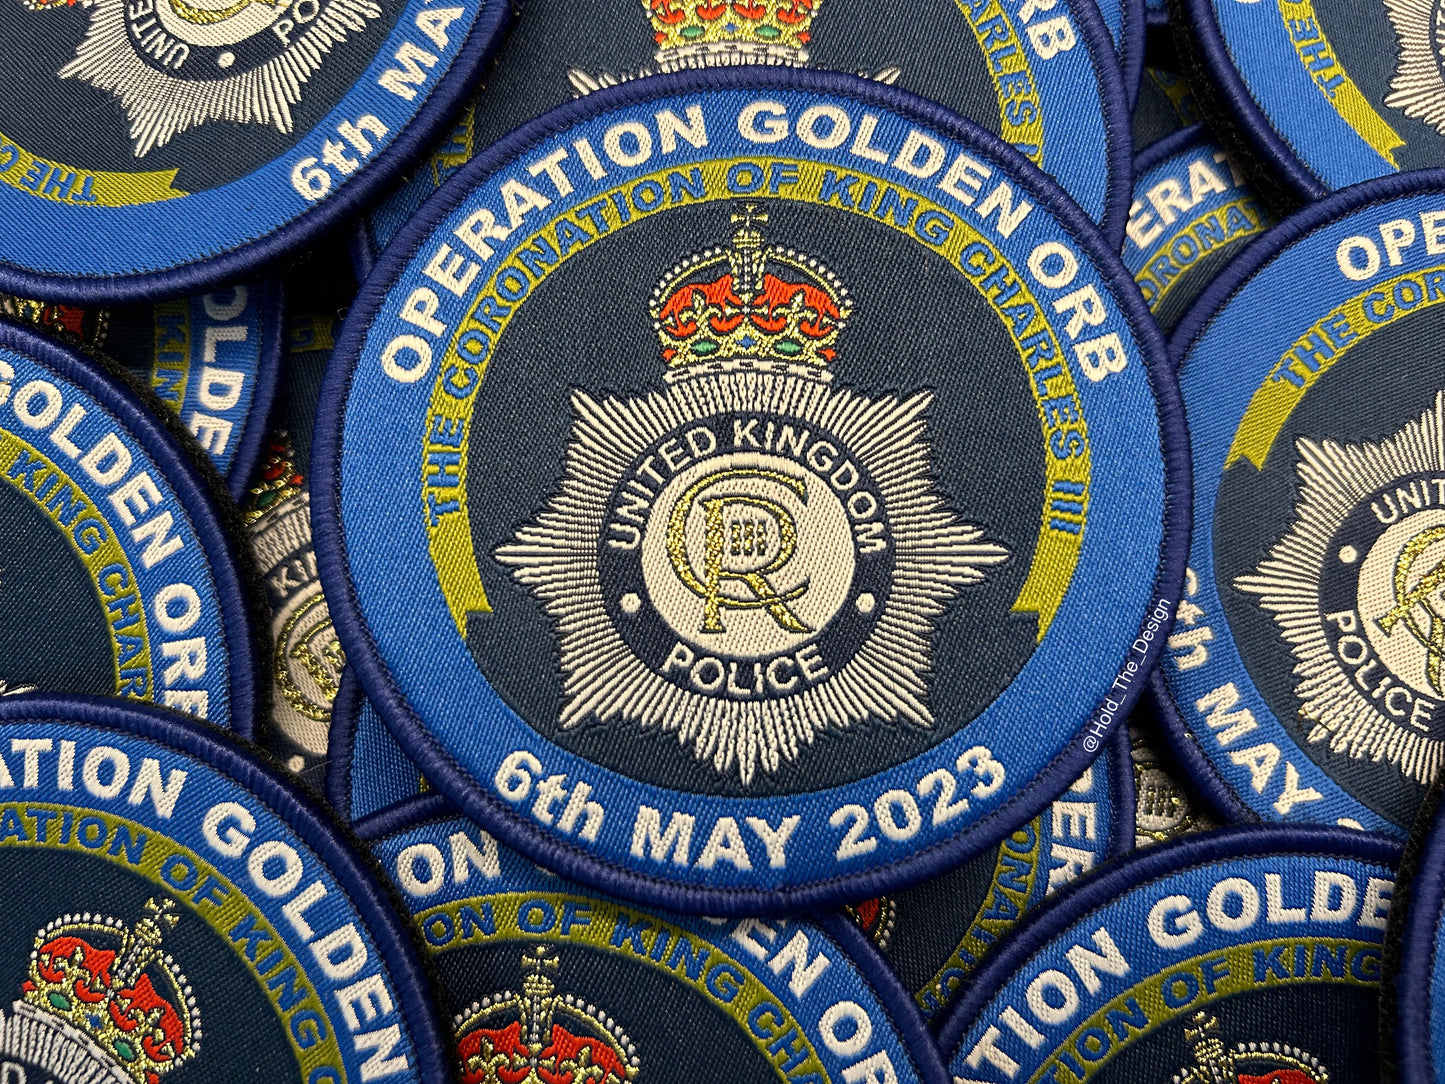 Operation Golden Orb - UK Police Patch